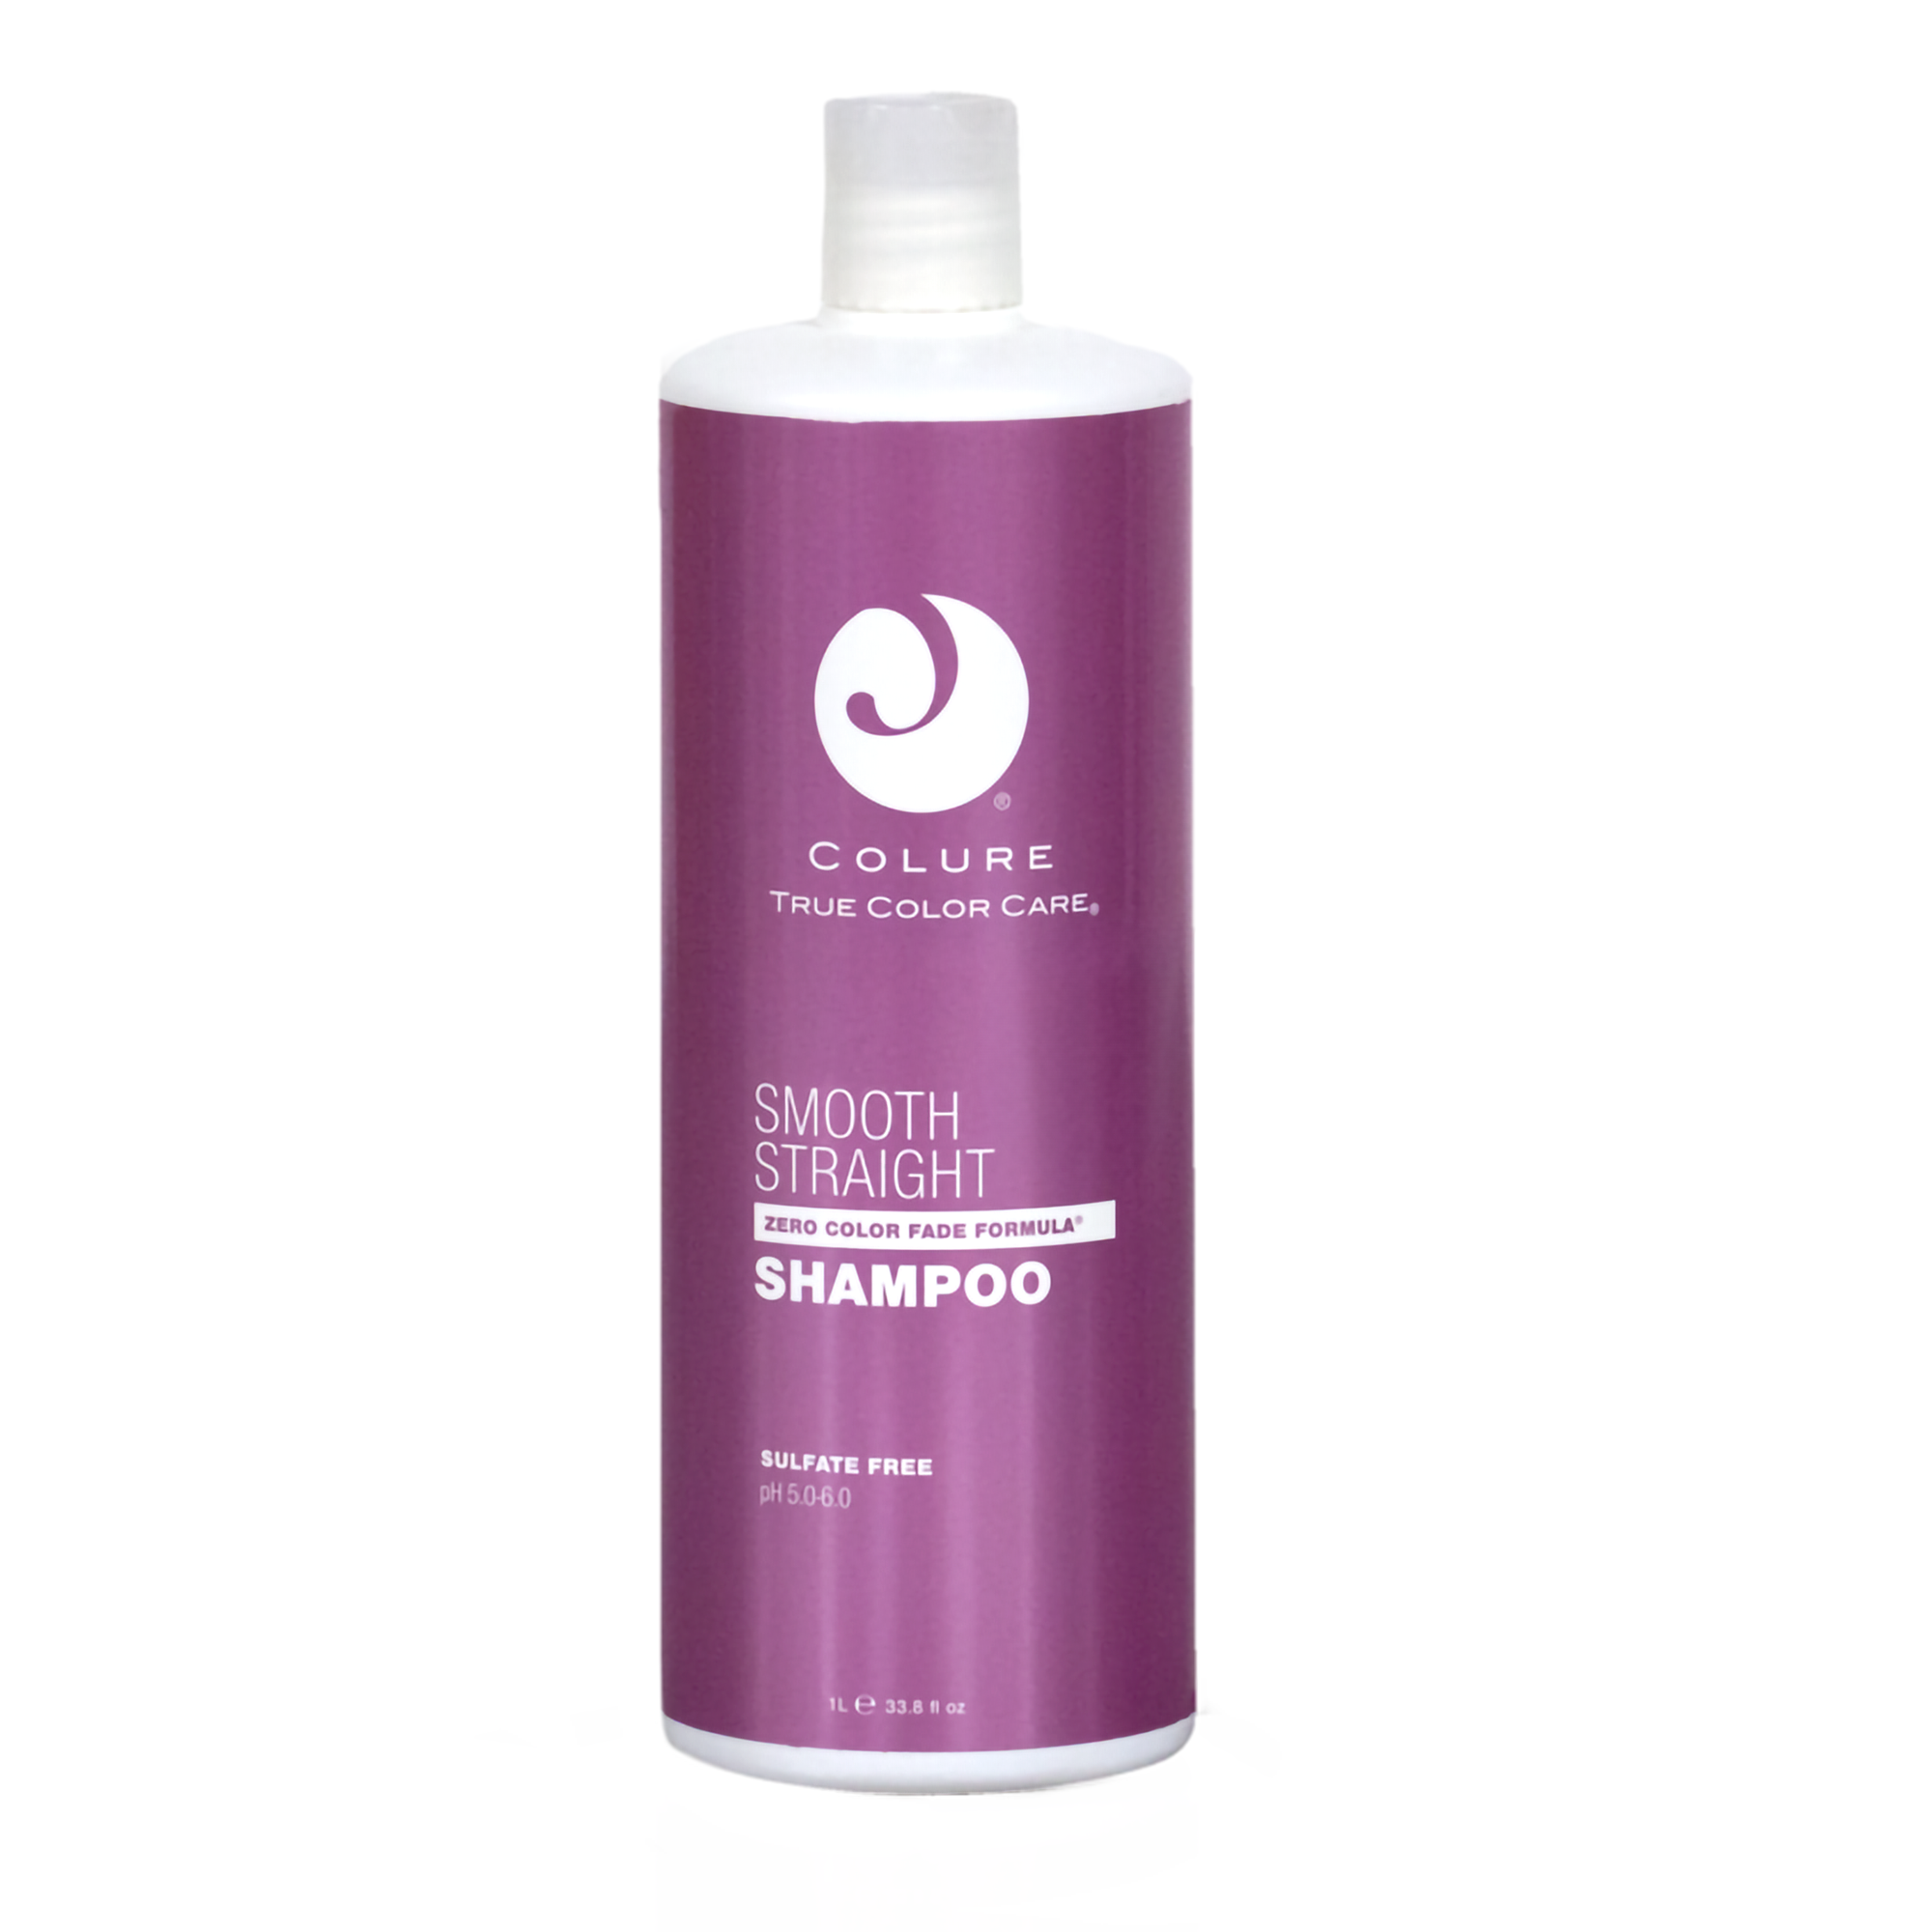 Colure Smooth Straight Shampoo - 33oz / 33.8